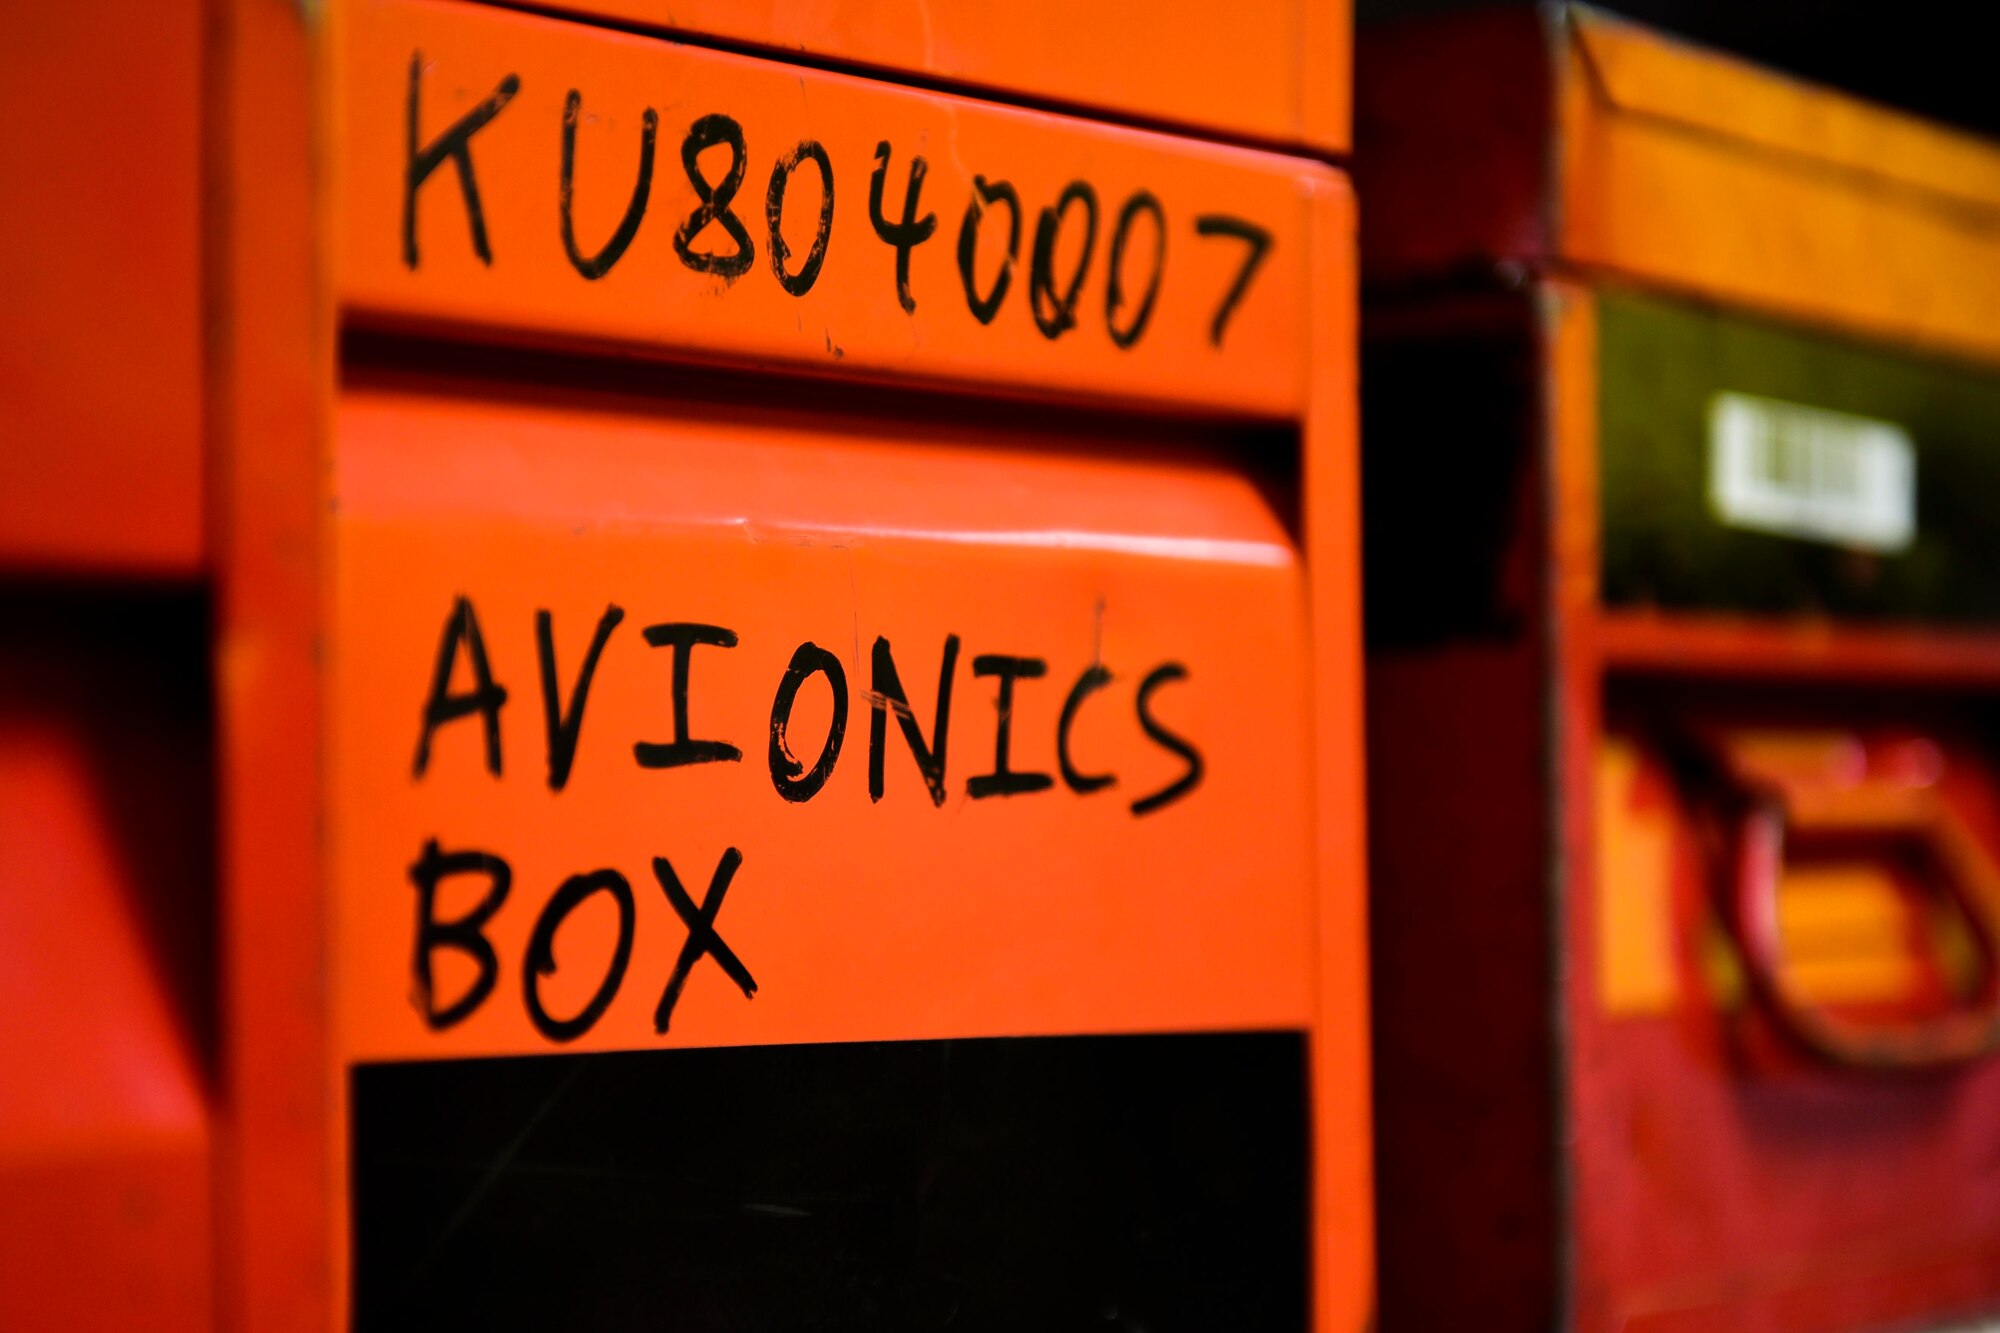 A photo of an avionics box.